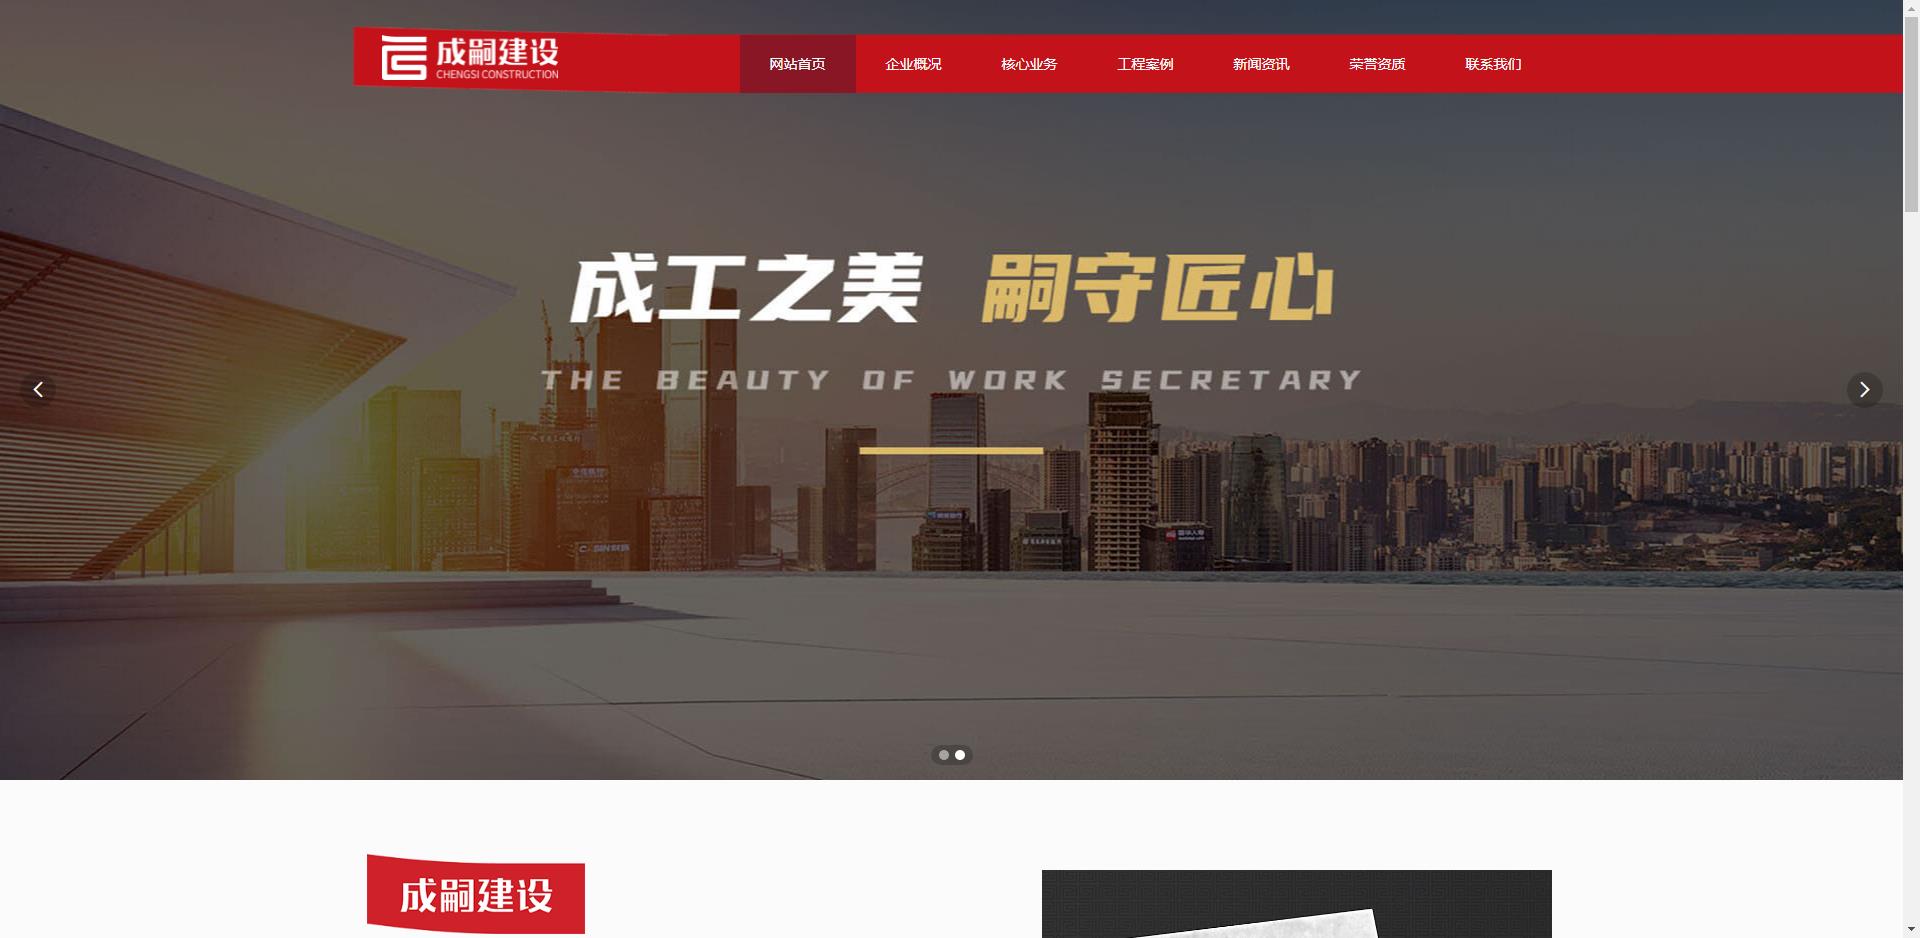 Wanren Network Technology Signed Contract with Jiangxi Chengsi Construction Co., Ltd